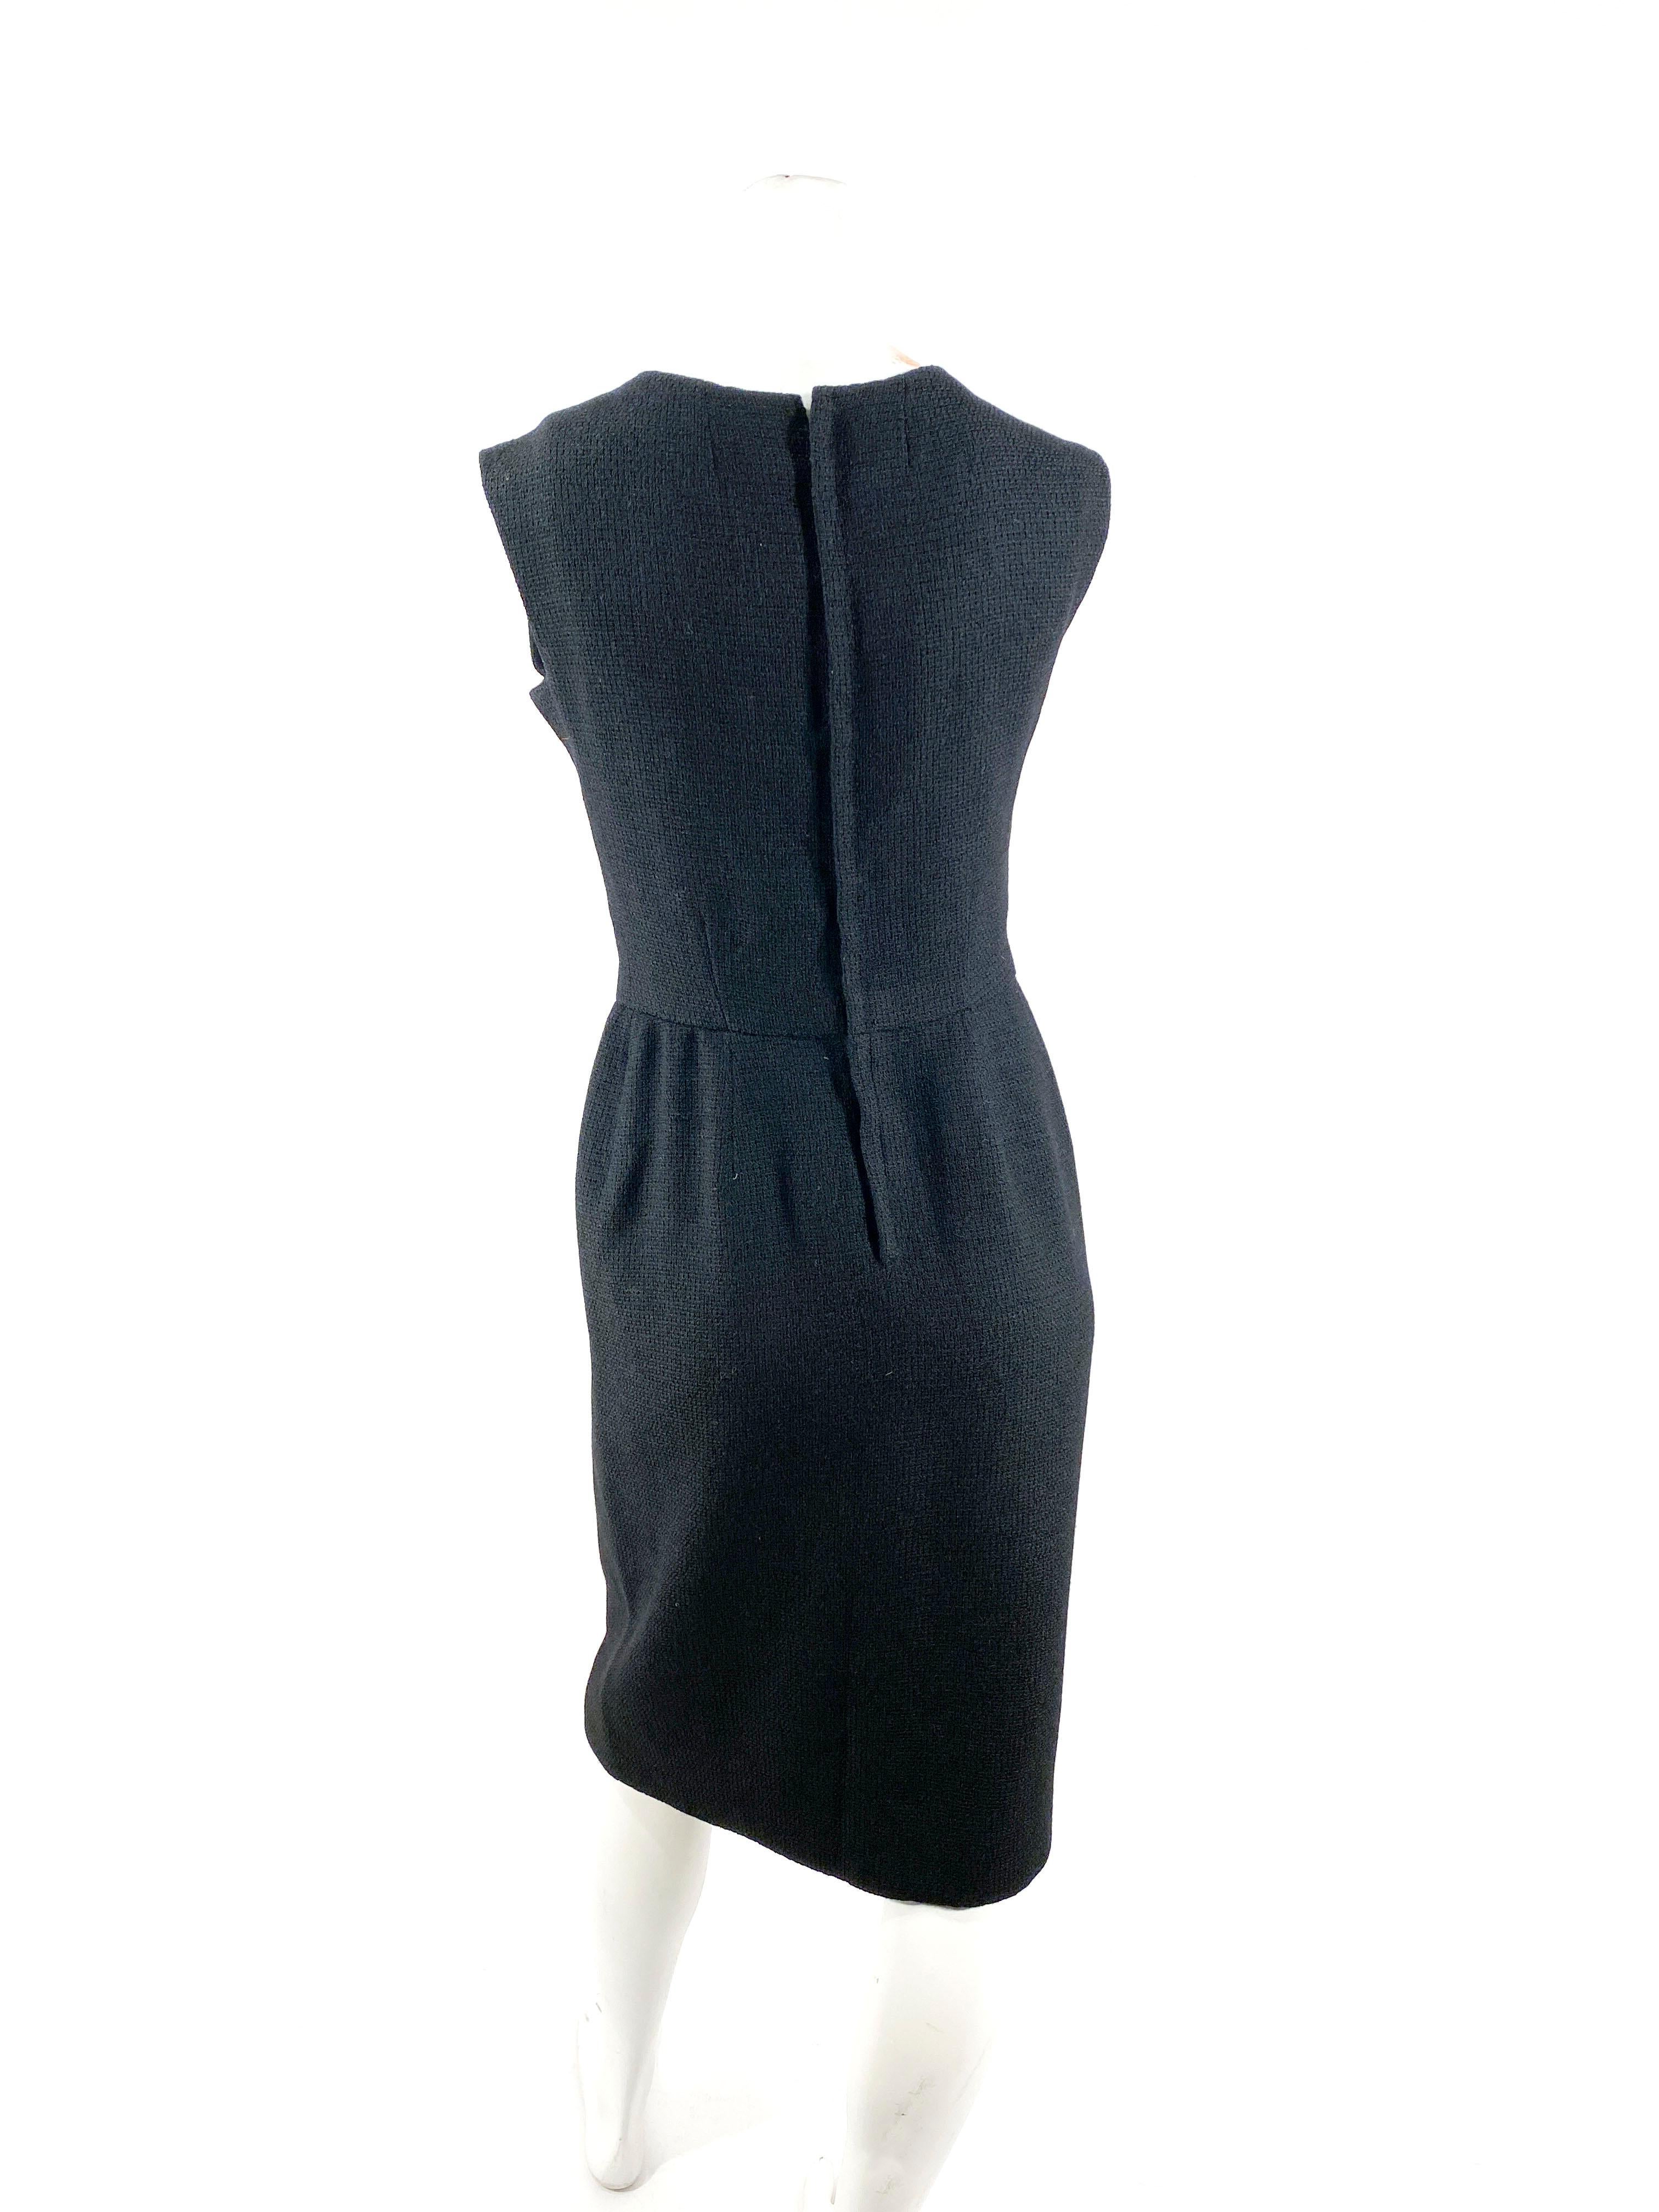 1950s/1960s Black Wool Dress For Sale 1